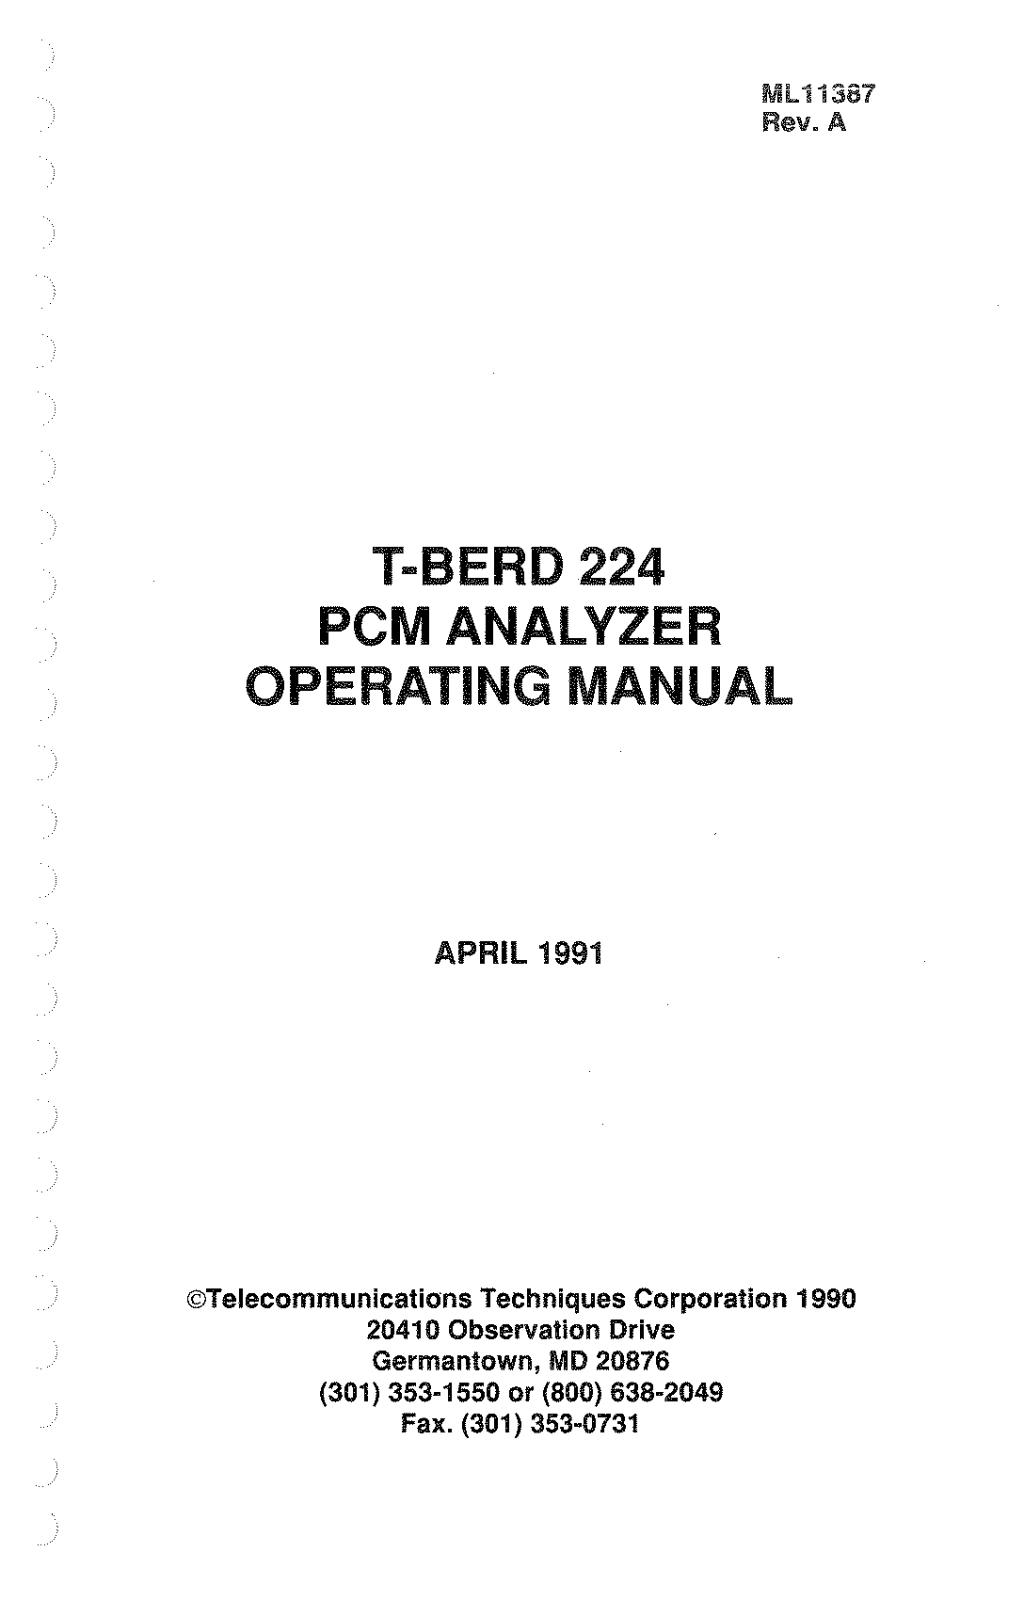 Telecommunications Techniques Corporation T-BERD 224 User Manual